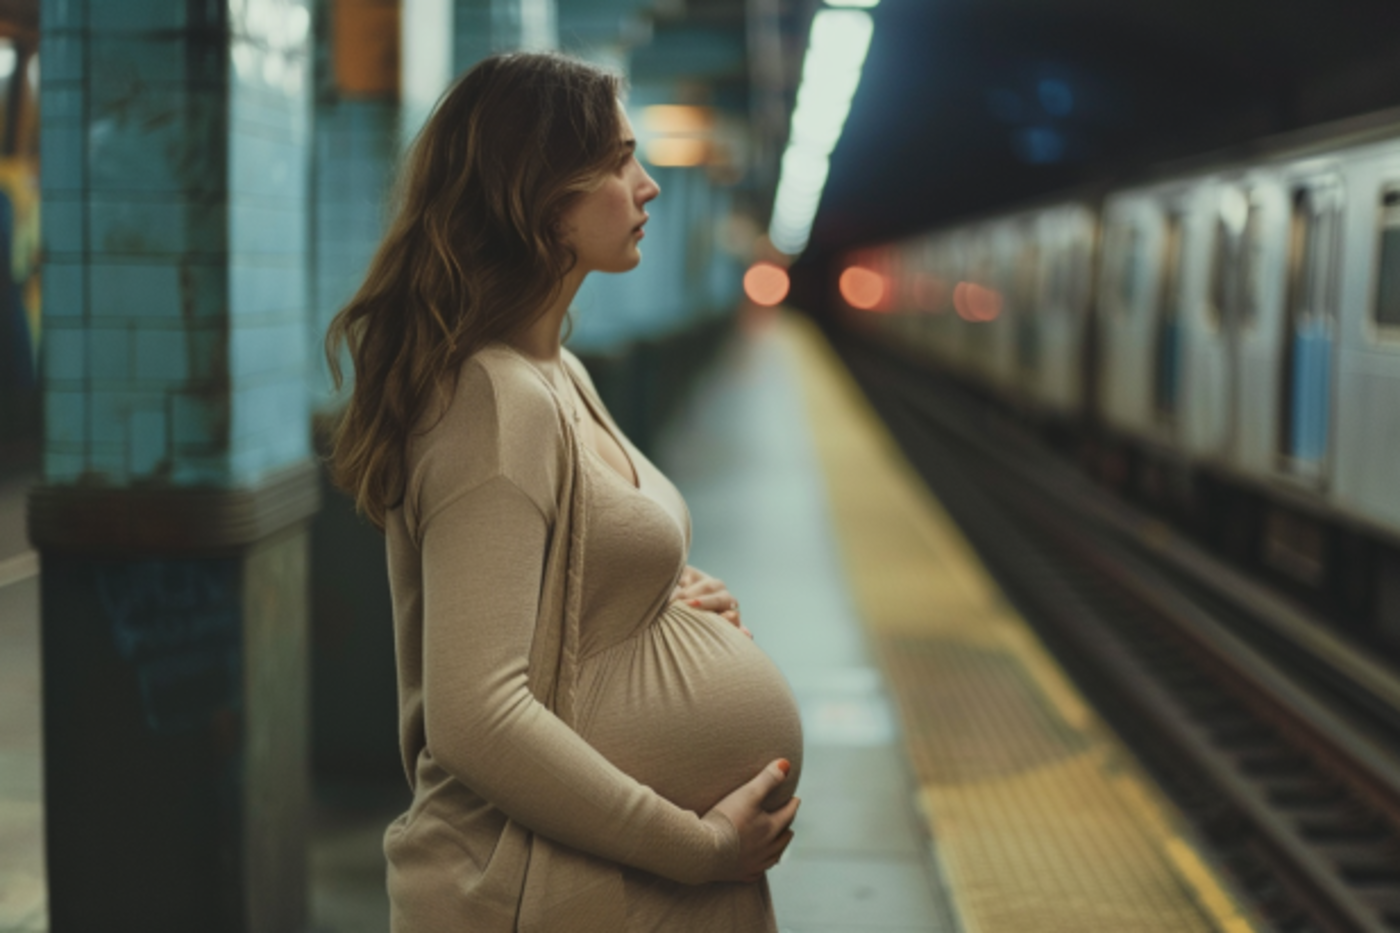 A heavily pregnant woman on a subway platform | Source: Midjourney